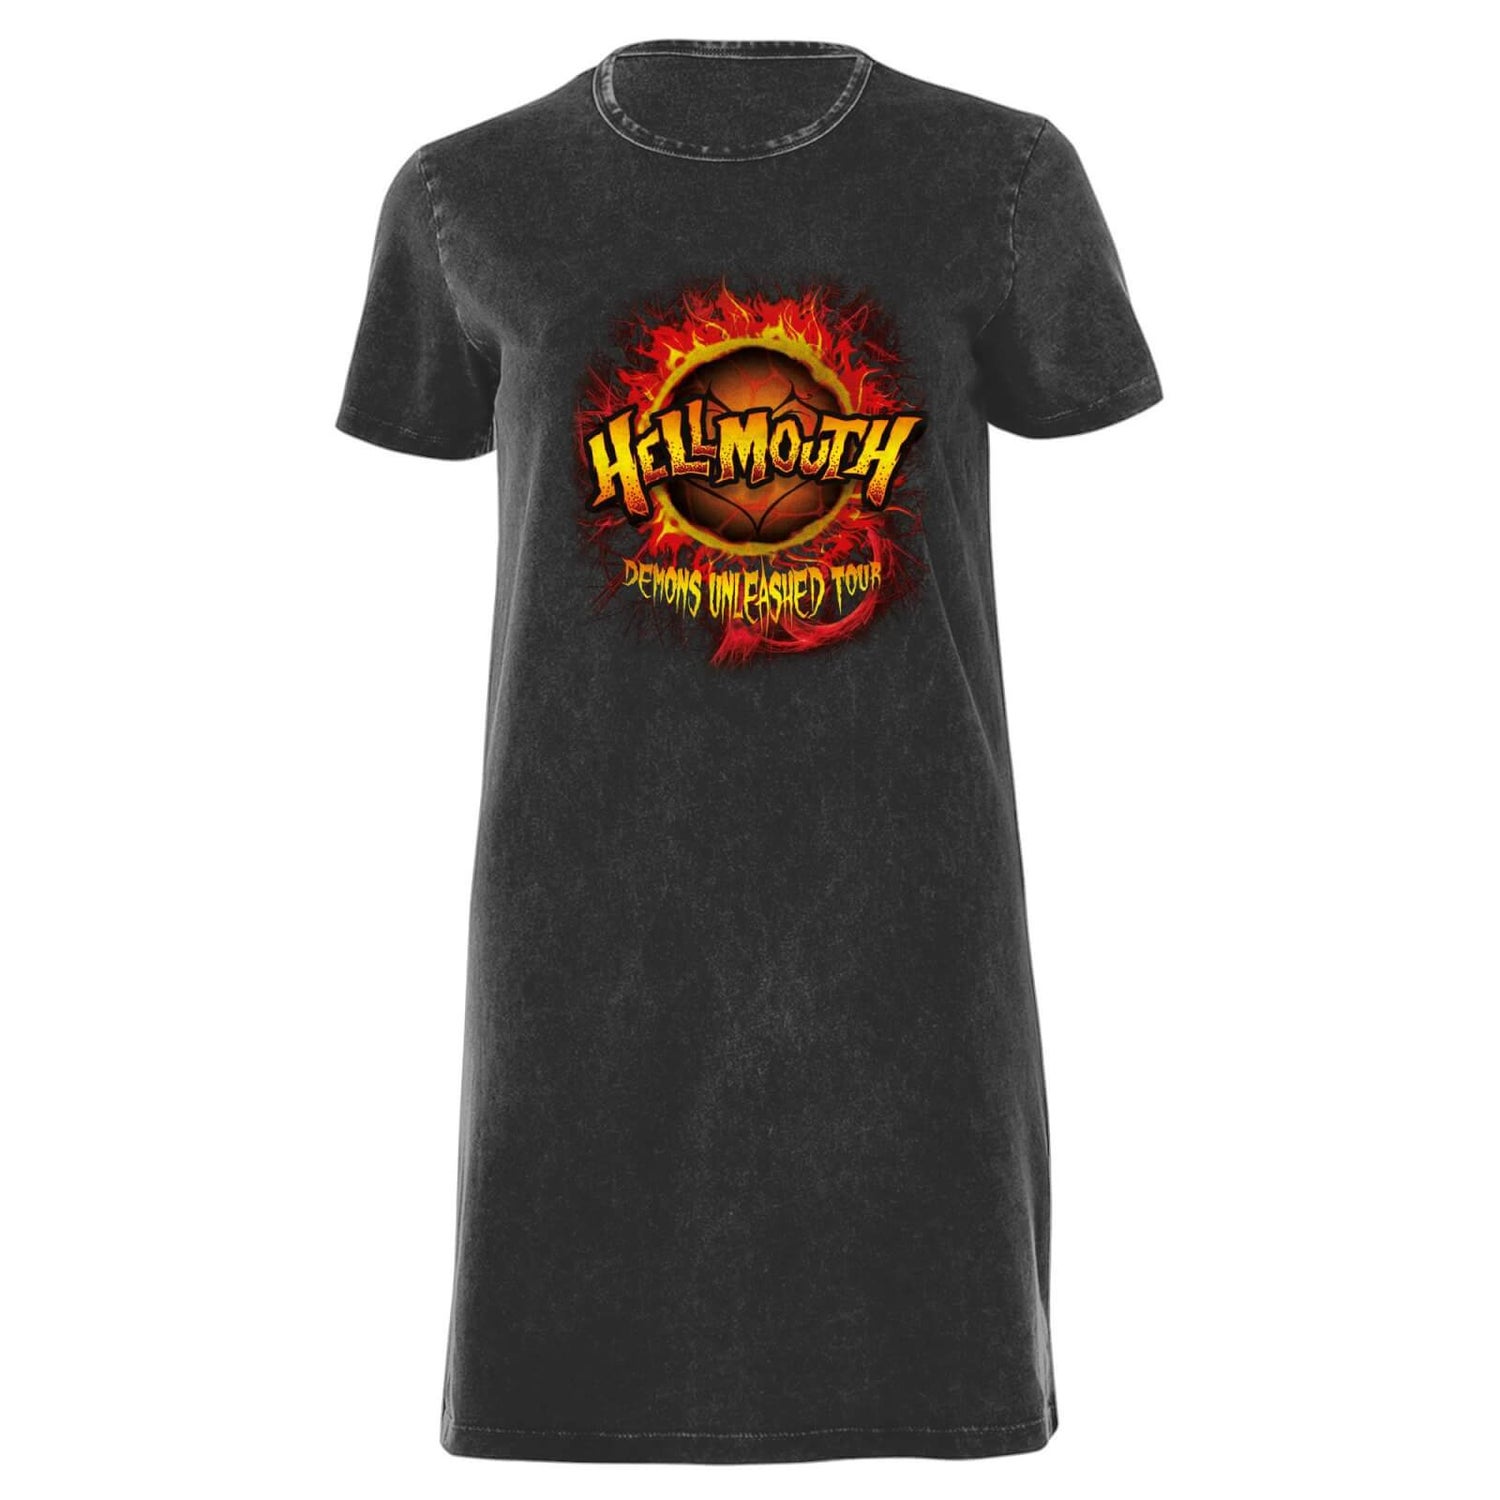 Buffy The Vampire Slayer Hellmouth Tour Women's T-Shirt Dress - Black Acid Wash